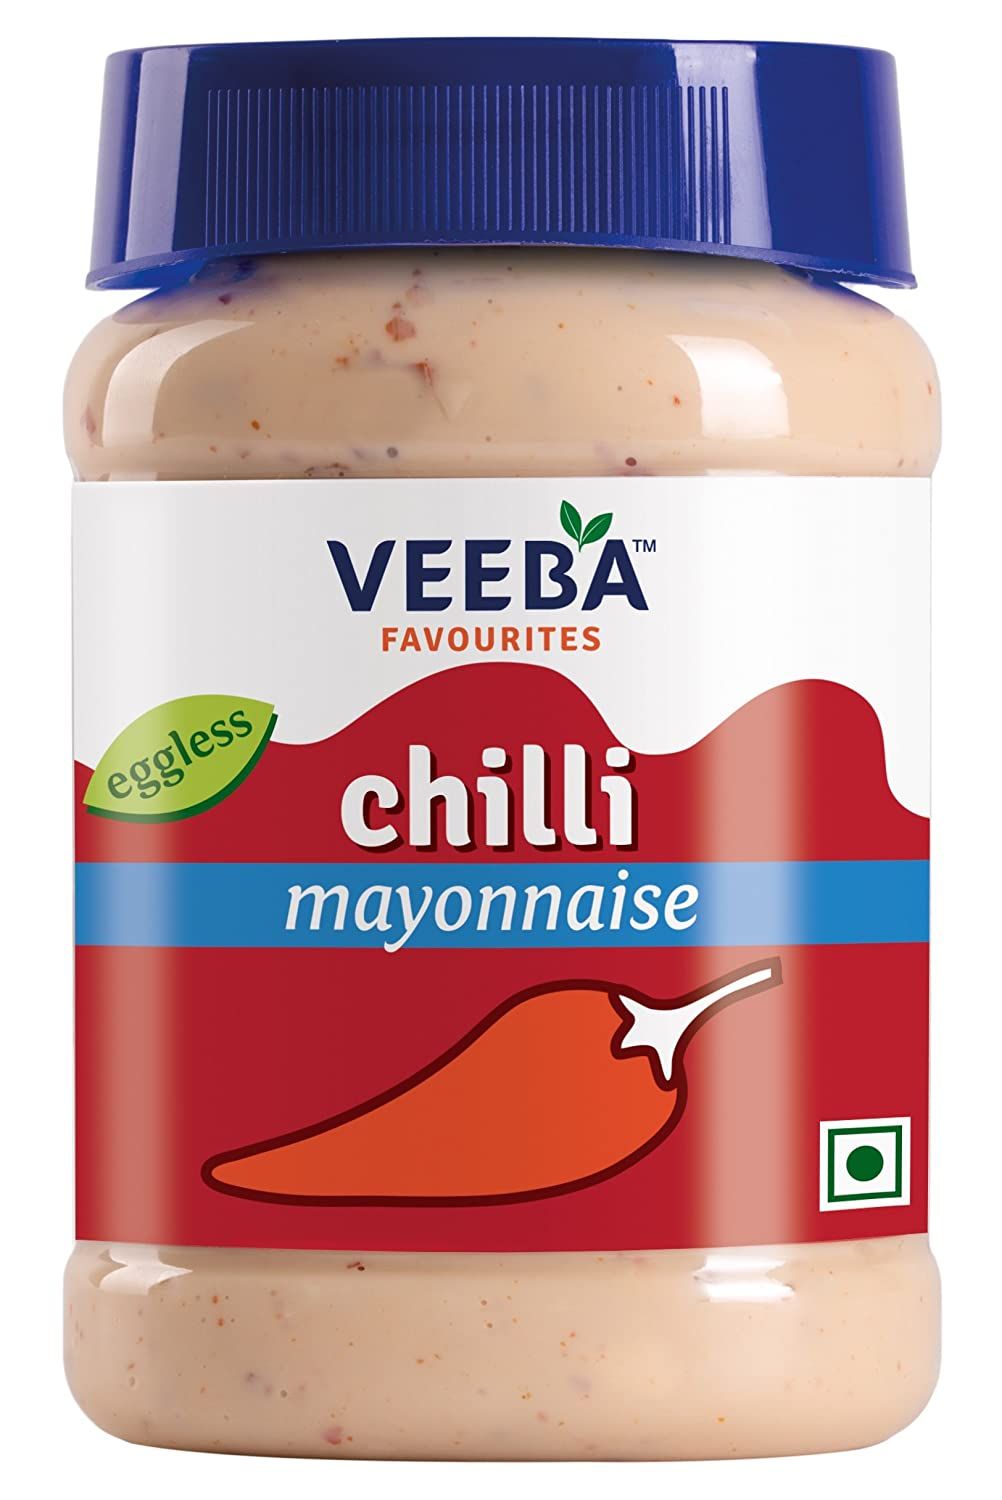 Veeba Chilli Mayonnaise Image